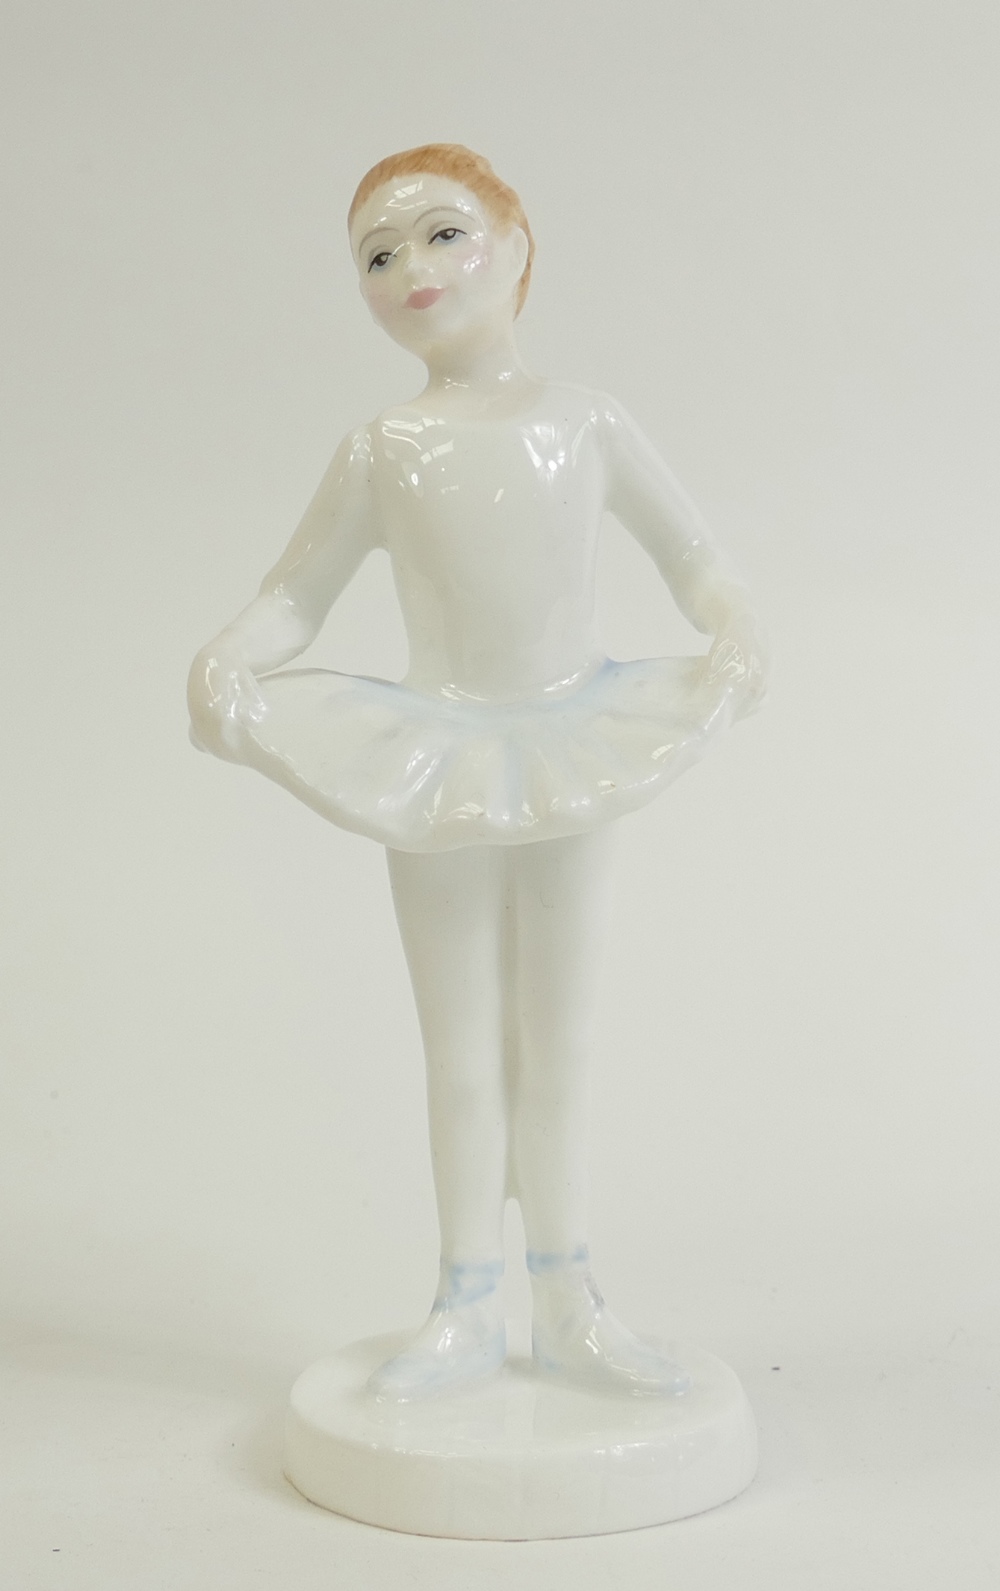 Royal Doulton Prototype figurine Ballerina: Royal Doulton Prototype figurine Ballerina